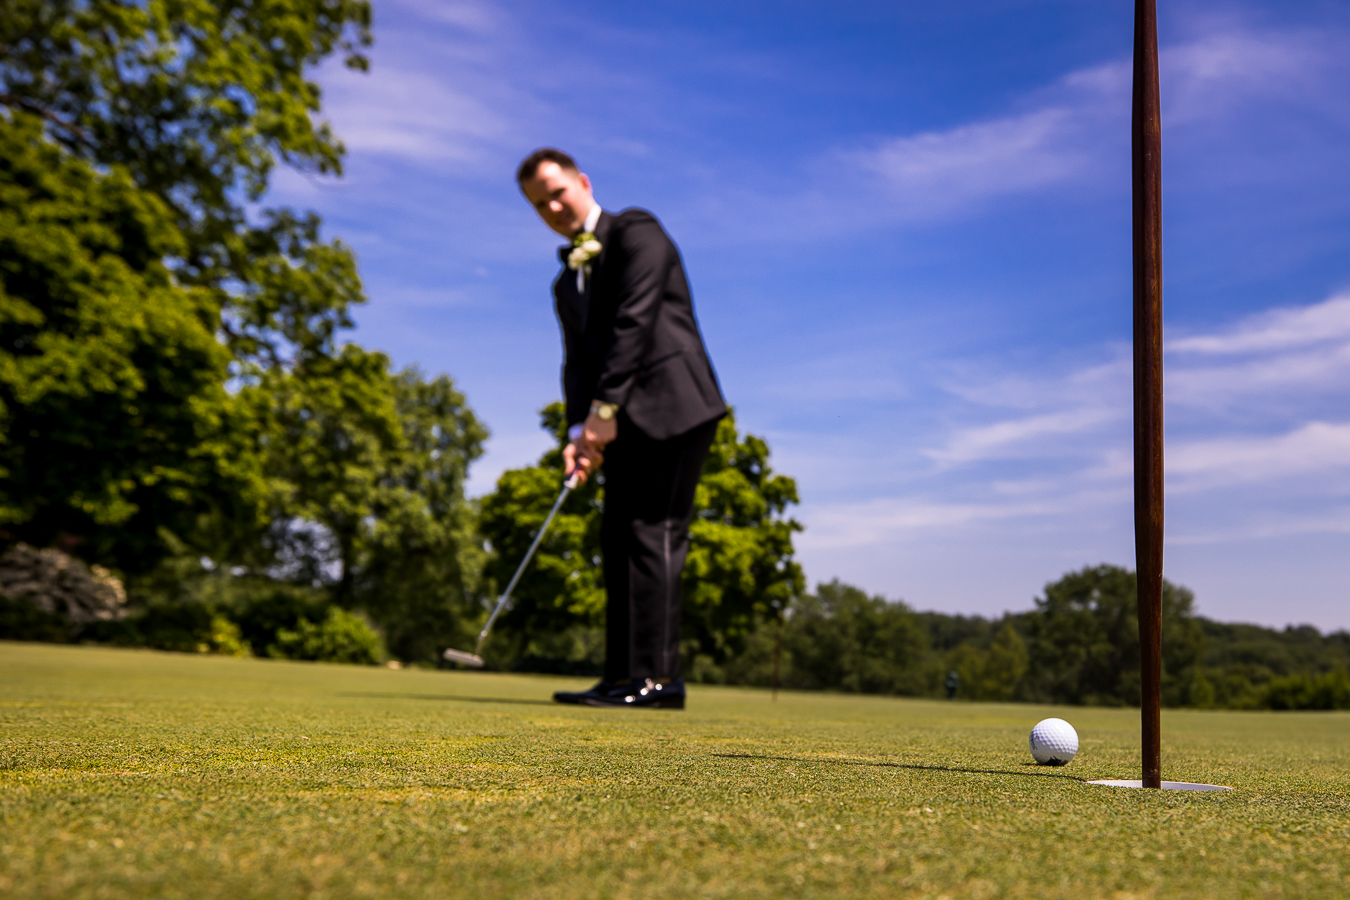 creative wedding photographer, rhinehart photography, captures this unique portrait of the groom golfing prior to the ceremony 